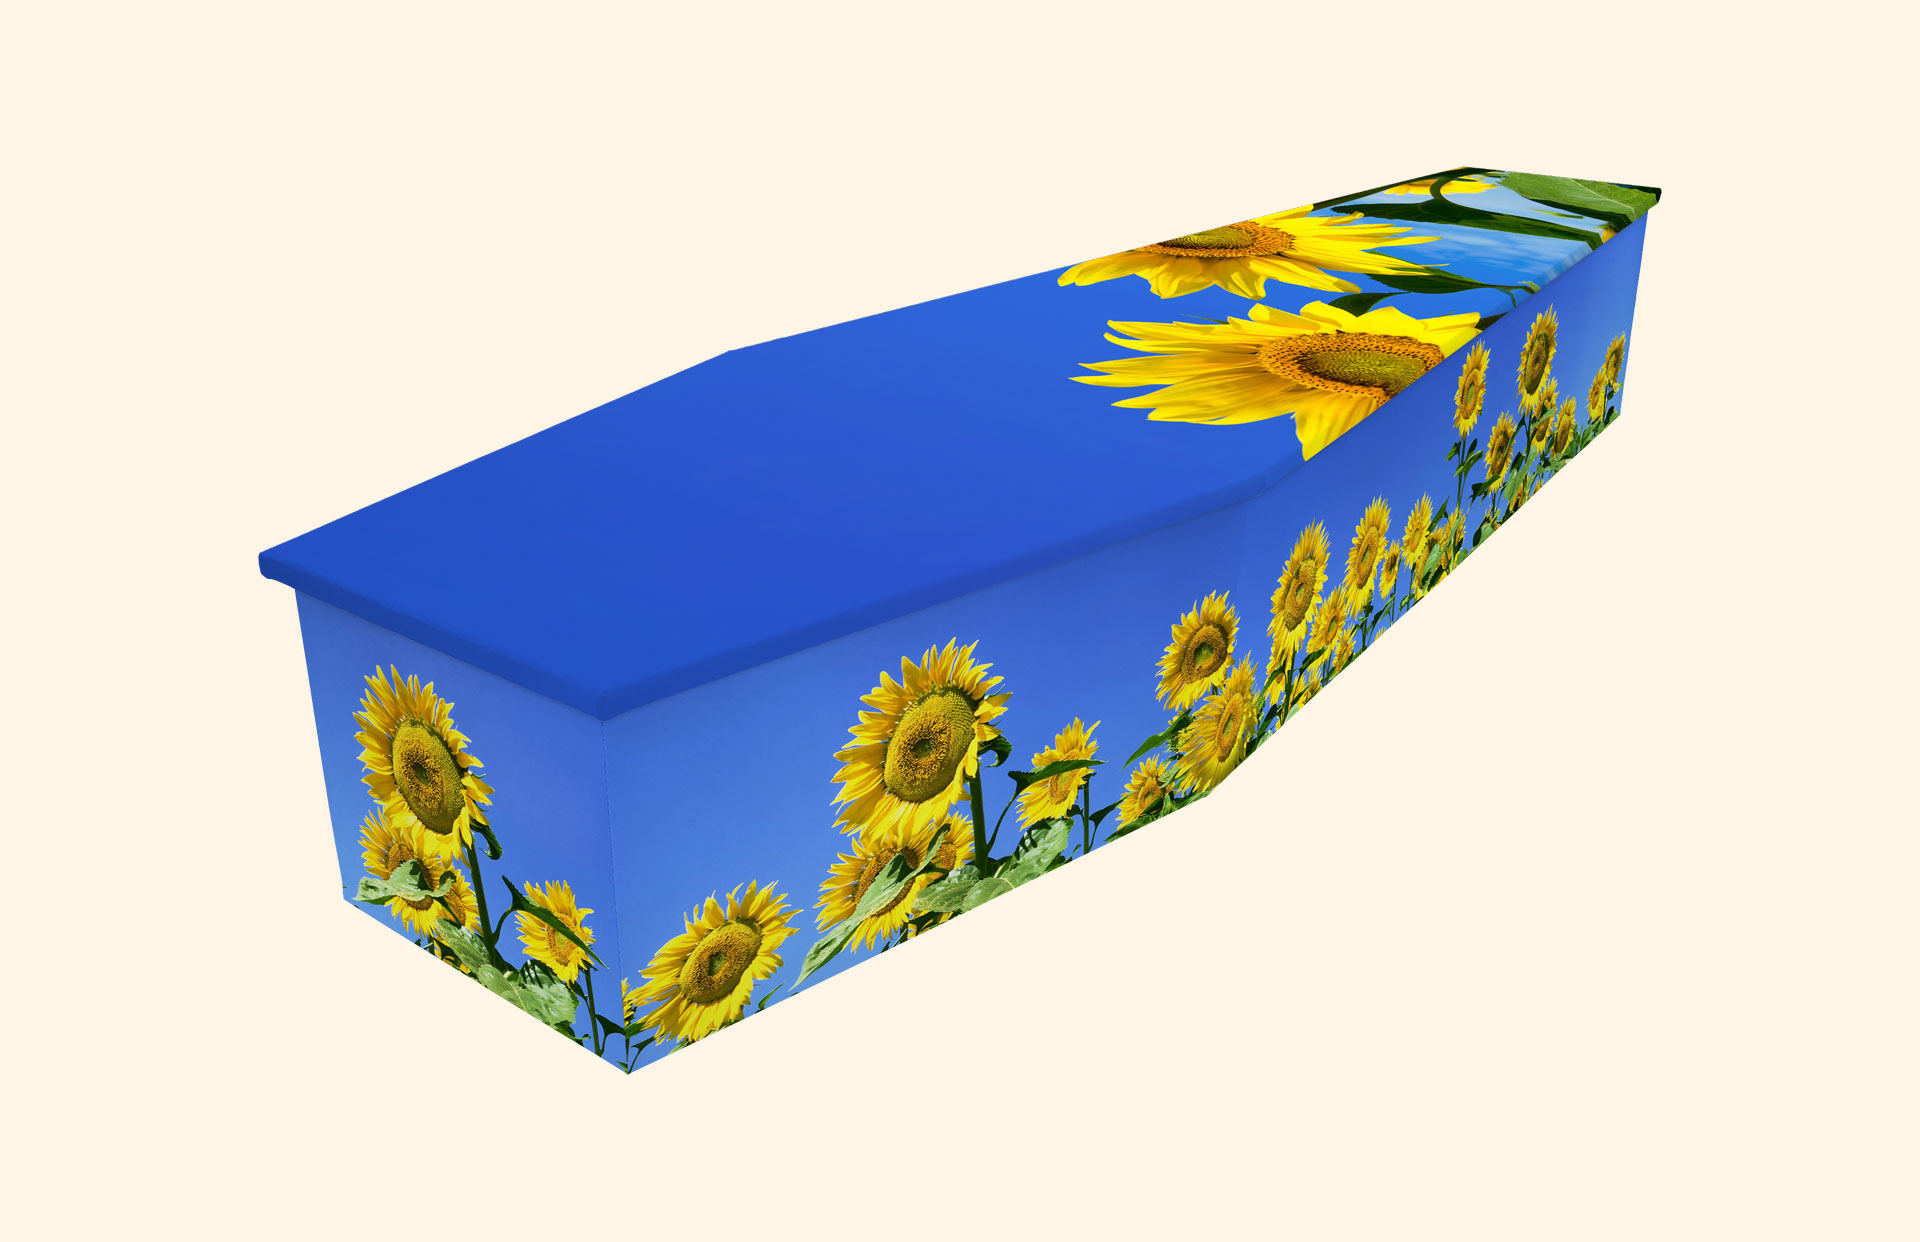 Sunflower Delight design on a cardboard coffin